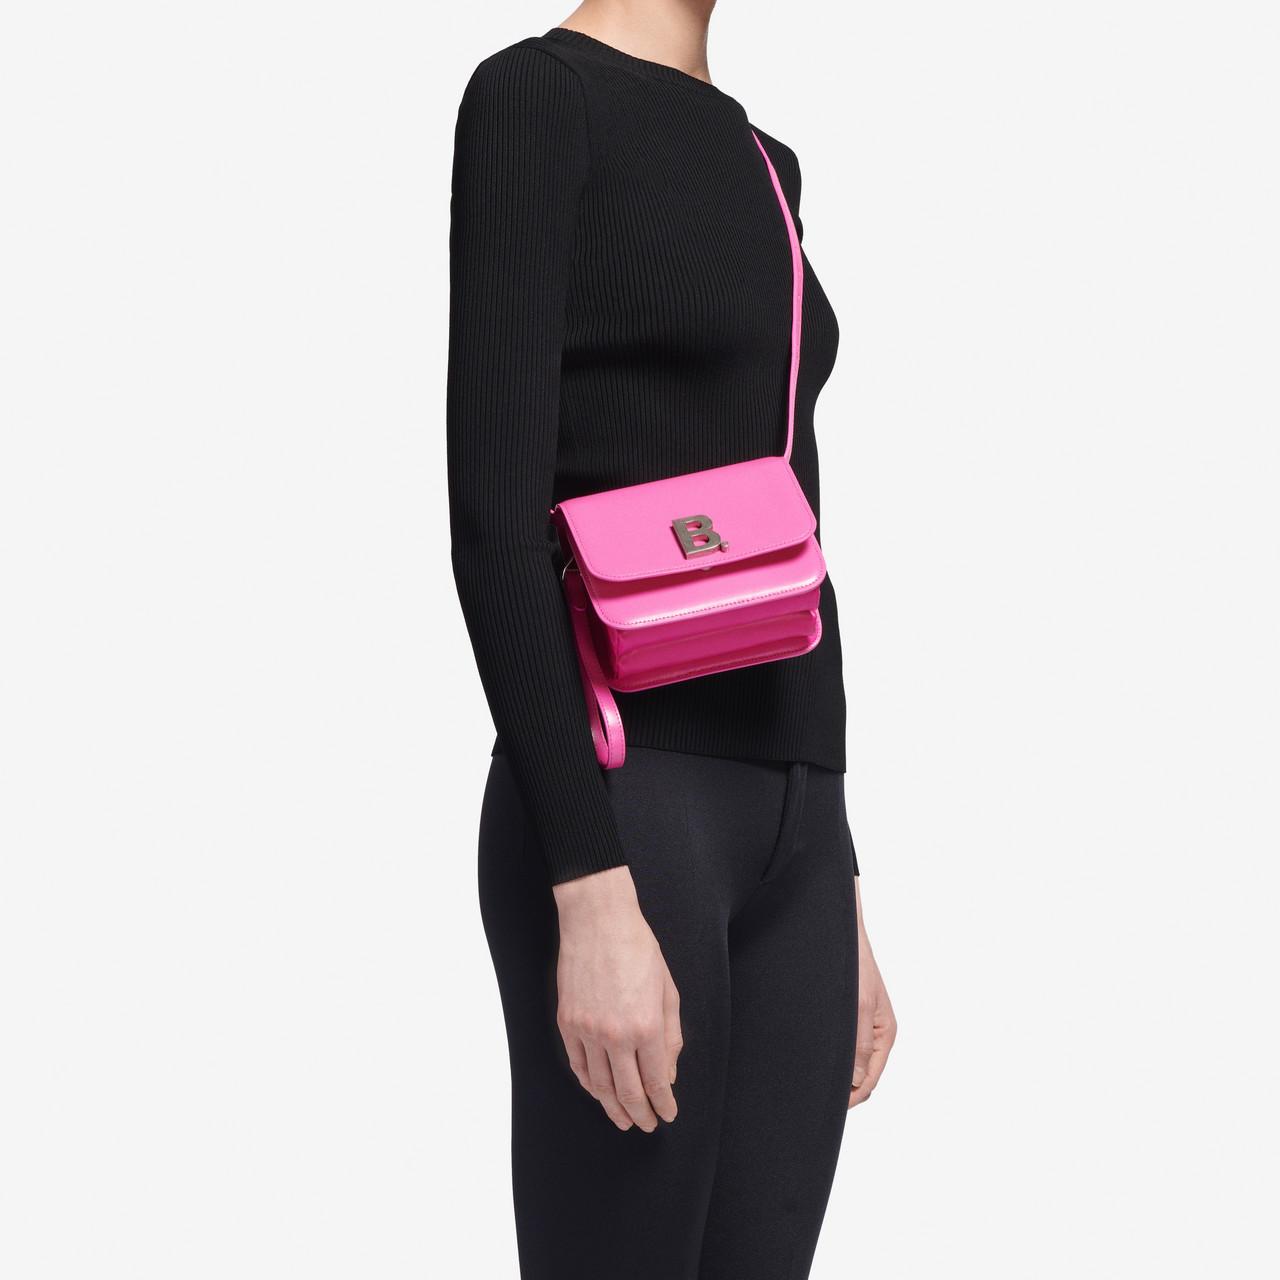 Balenciaga B. Small Bag in Pink | Lyst